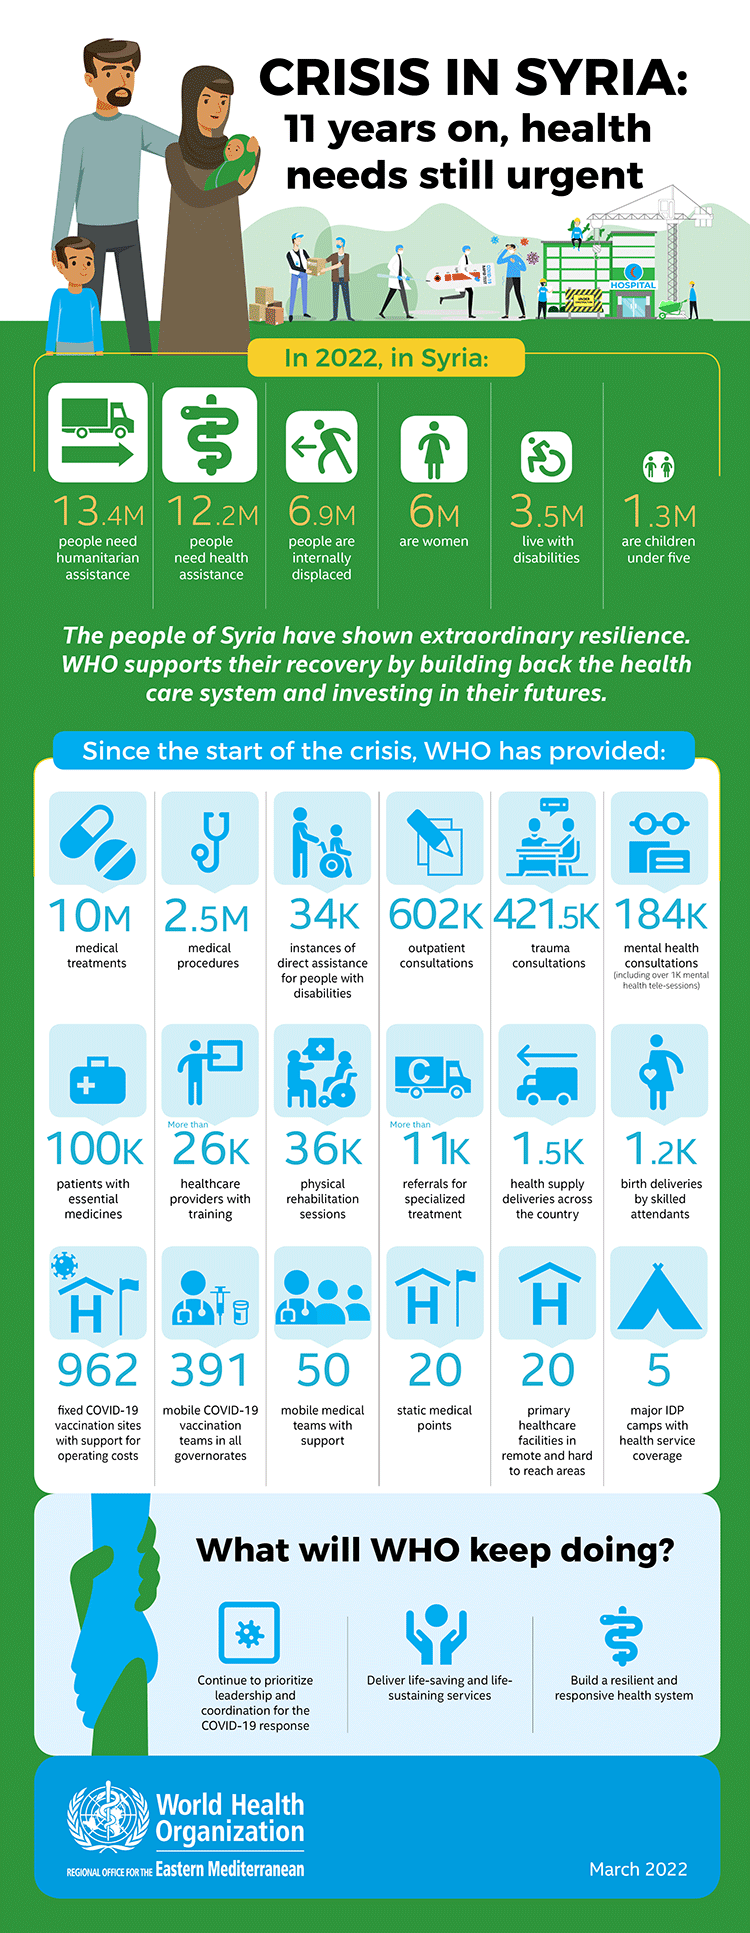 Crisis in Syria: 11 years on, health needs still urgent